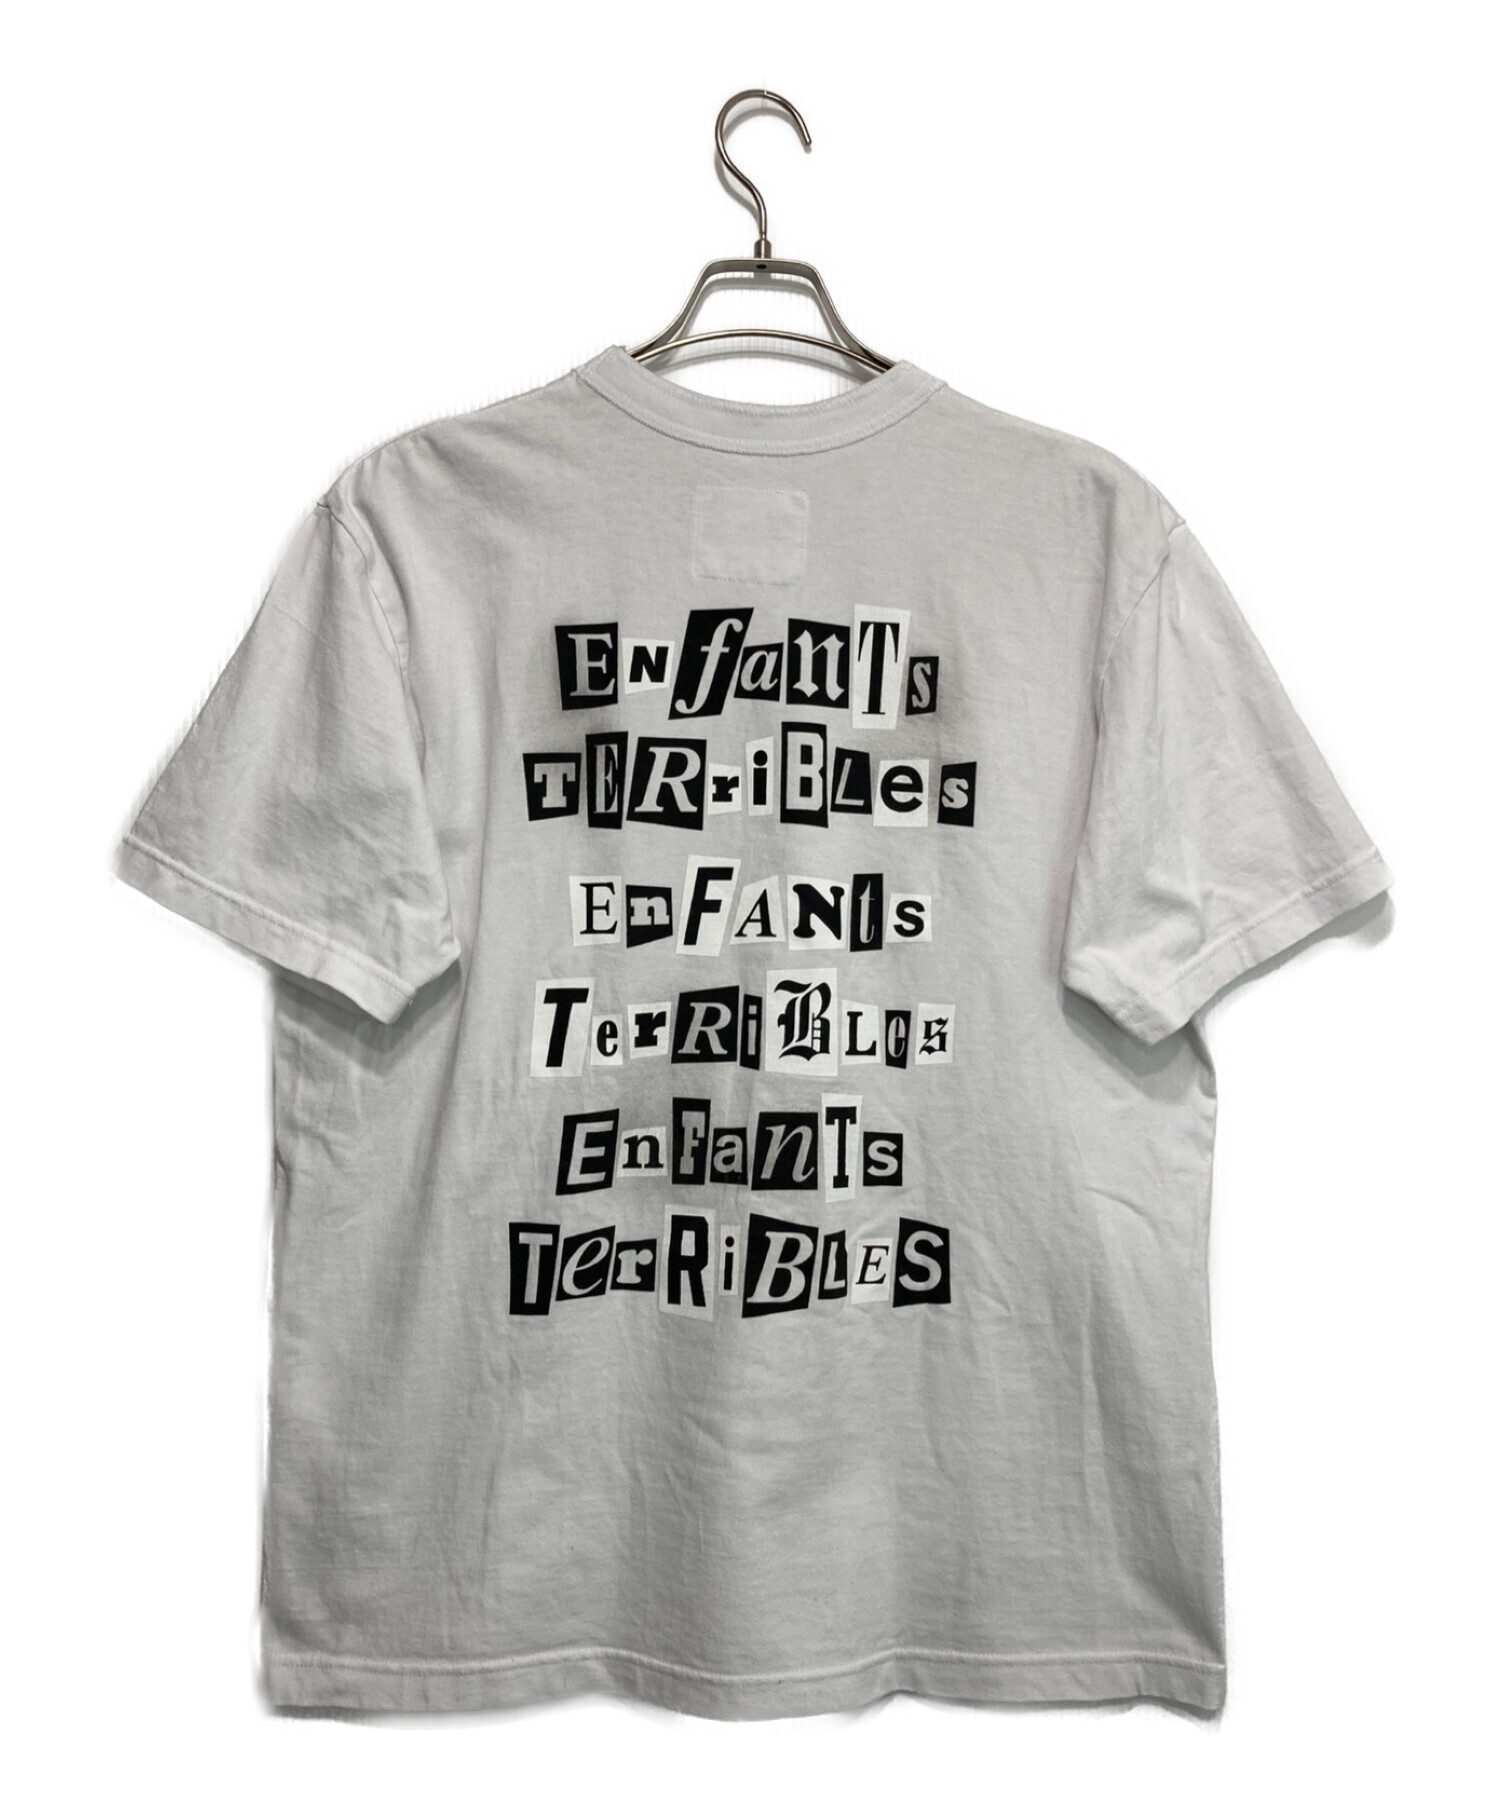 sacai (サカイ) Jean Paul Gaultier (ジャンポールゴルチエ) Enfants Terribles Print T-Shirt  ホワイト サイズ:3